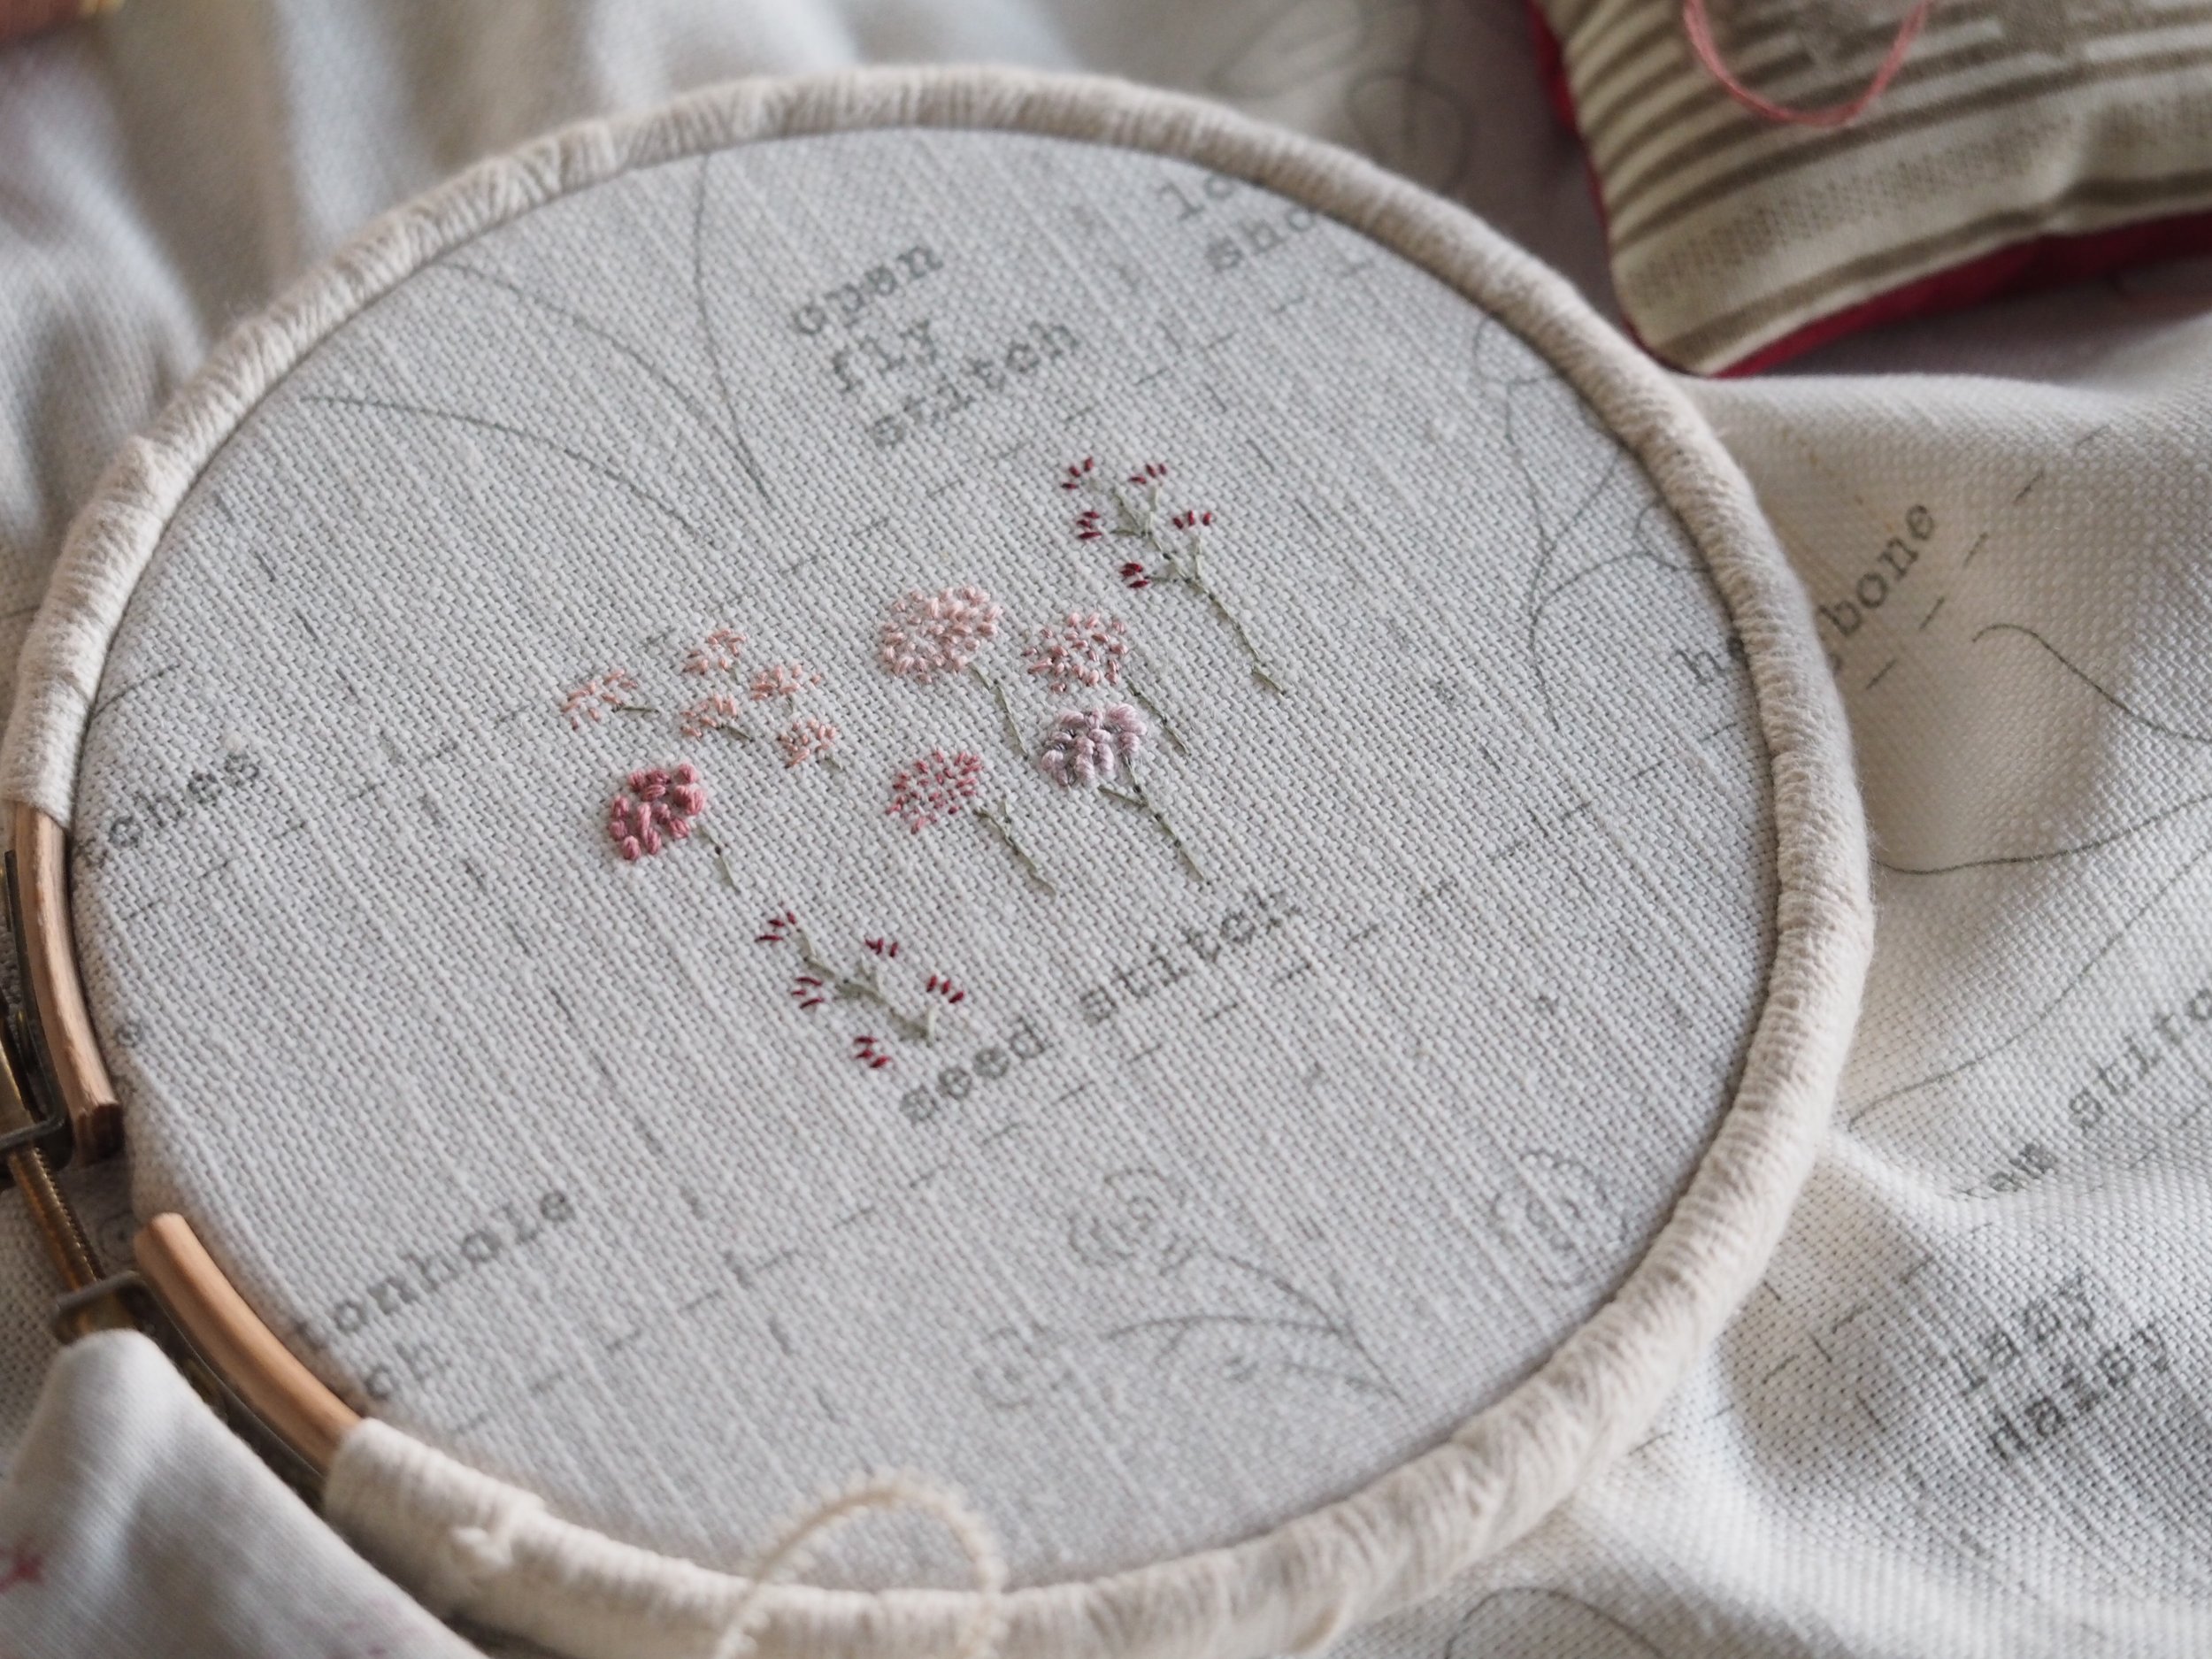 Stitcher's Christmas 2017 Give-Away 1: Ribbon Embroidery on Felt Kits &  Books! –